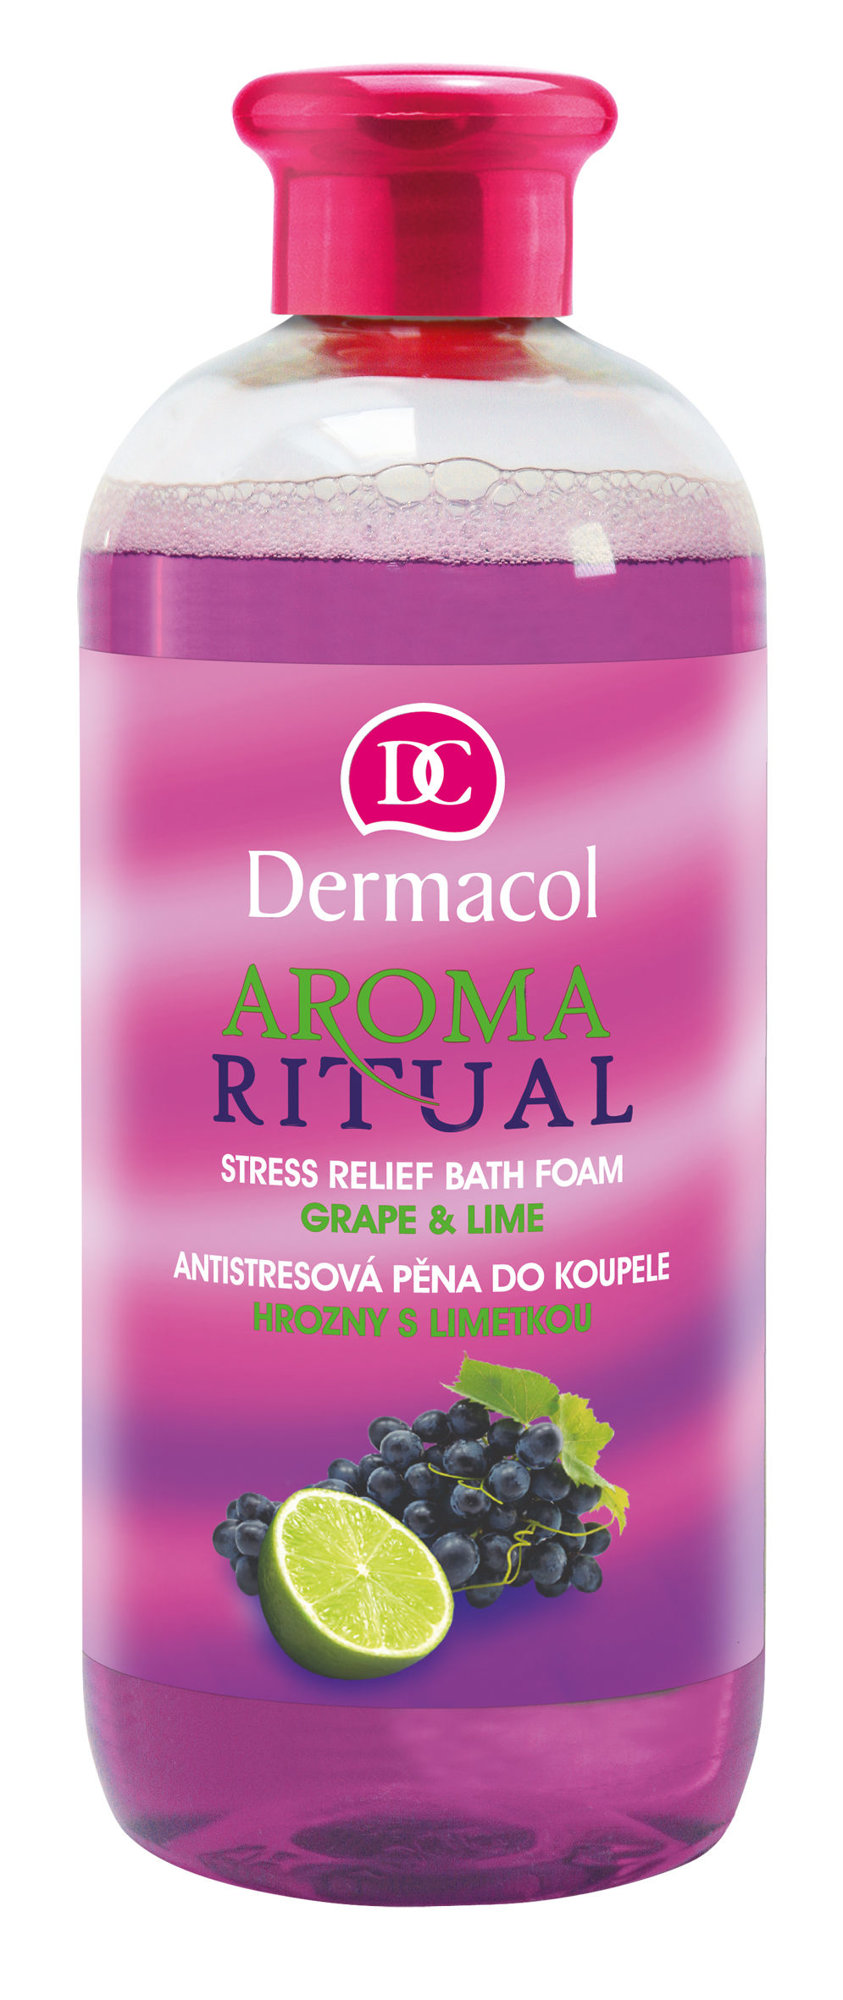 Dermacol Aroma Ritual Grape & Lime vonios putos